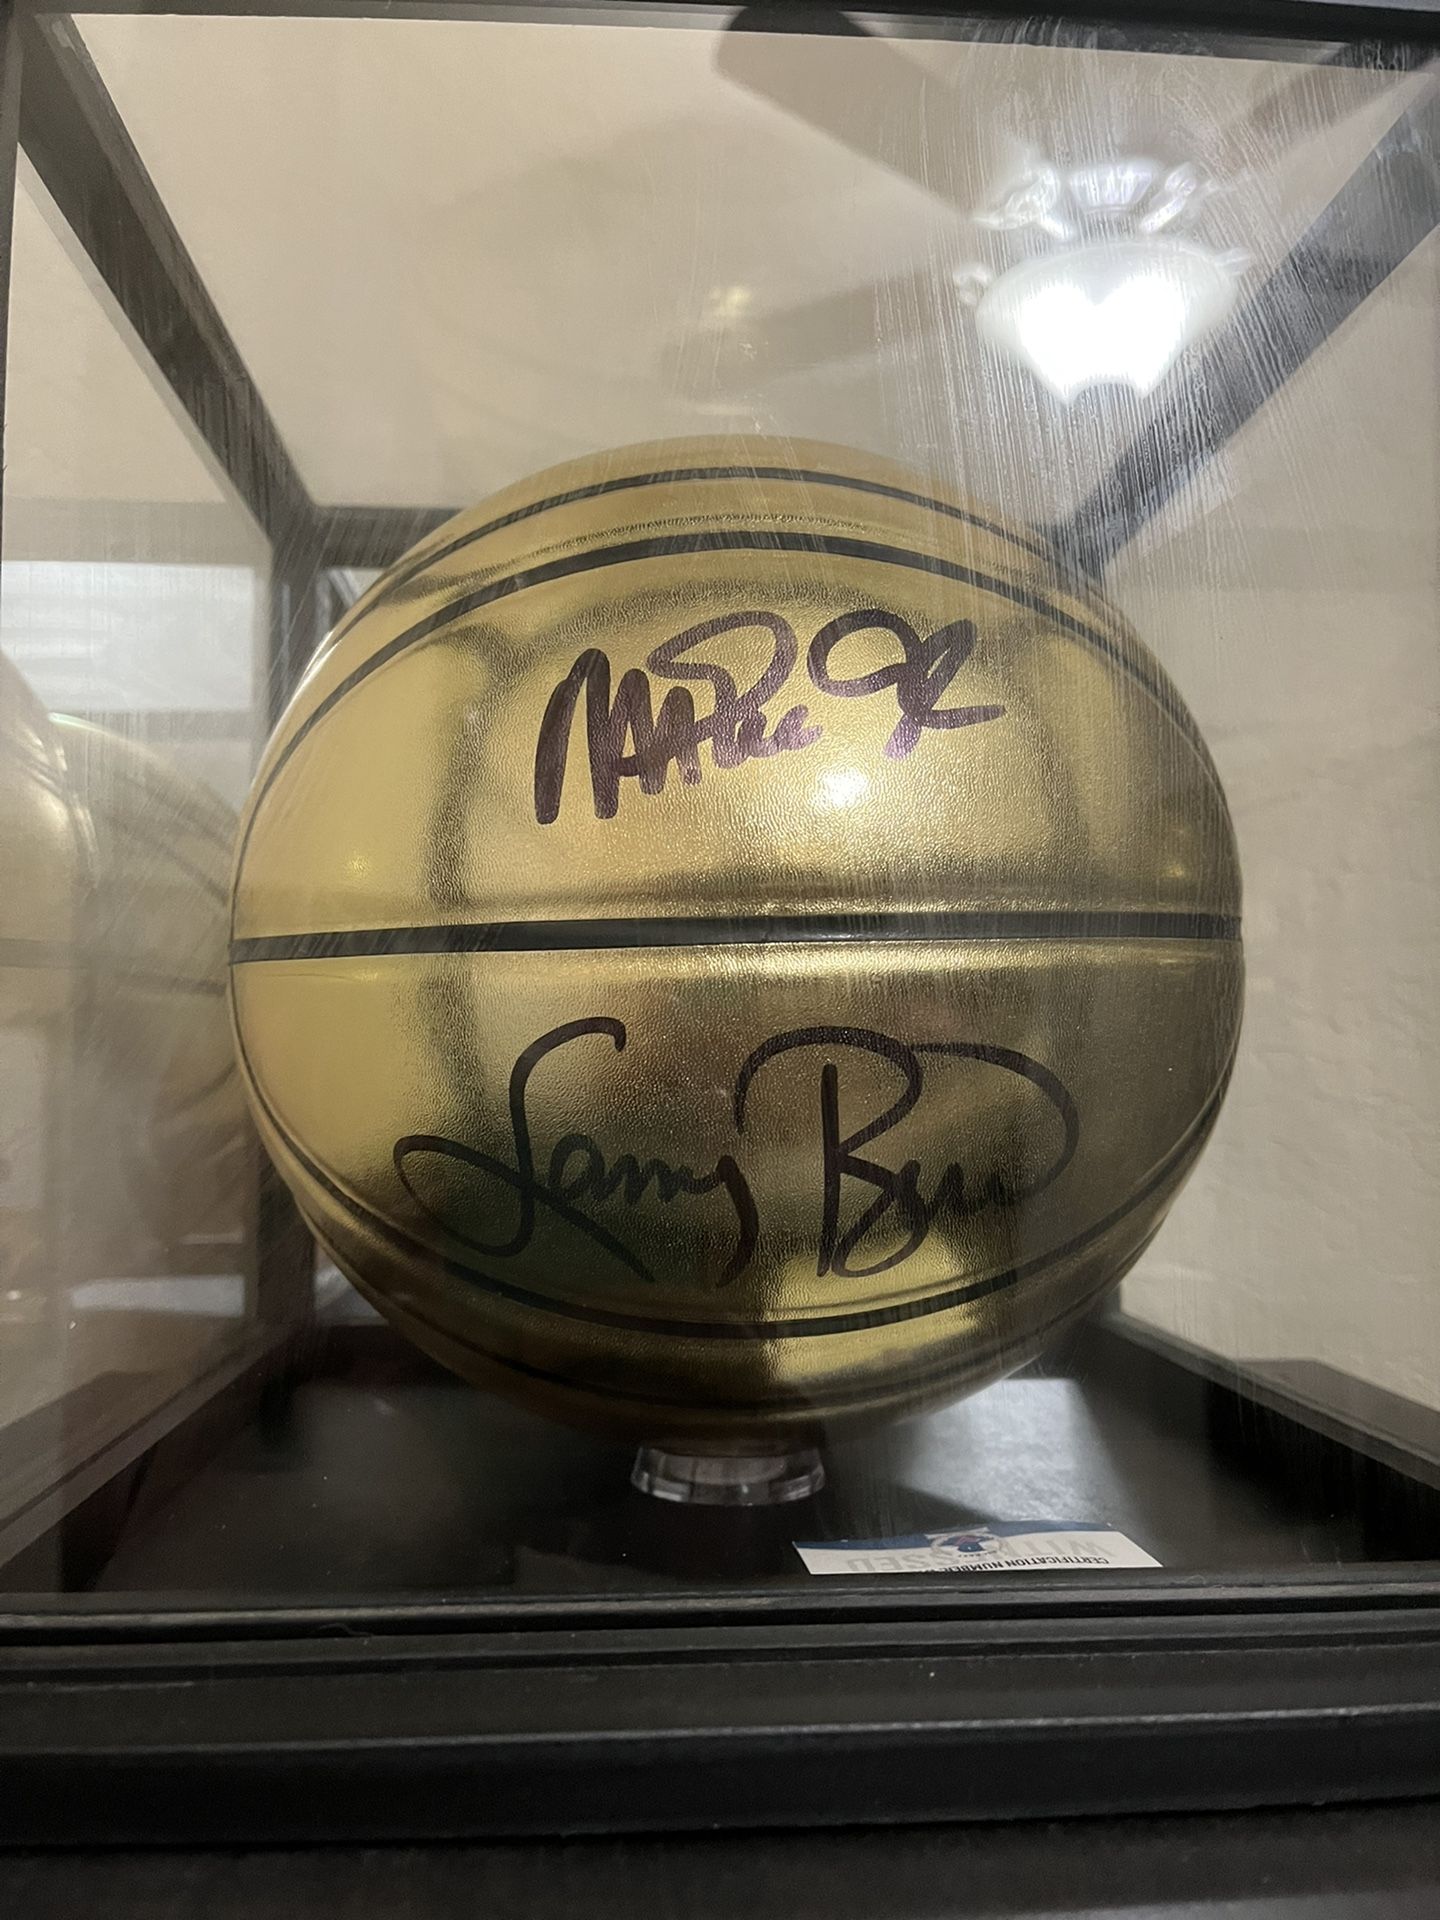 Larry Bird and Magic Johnson Signed Basketball. Basketball